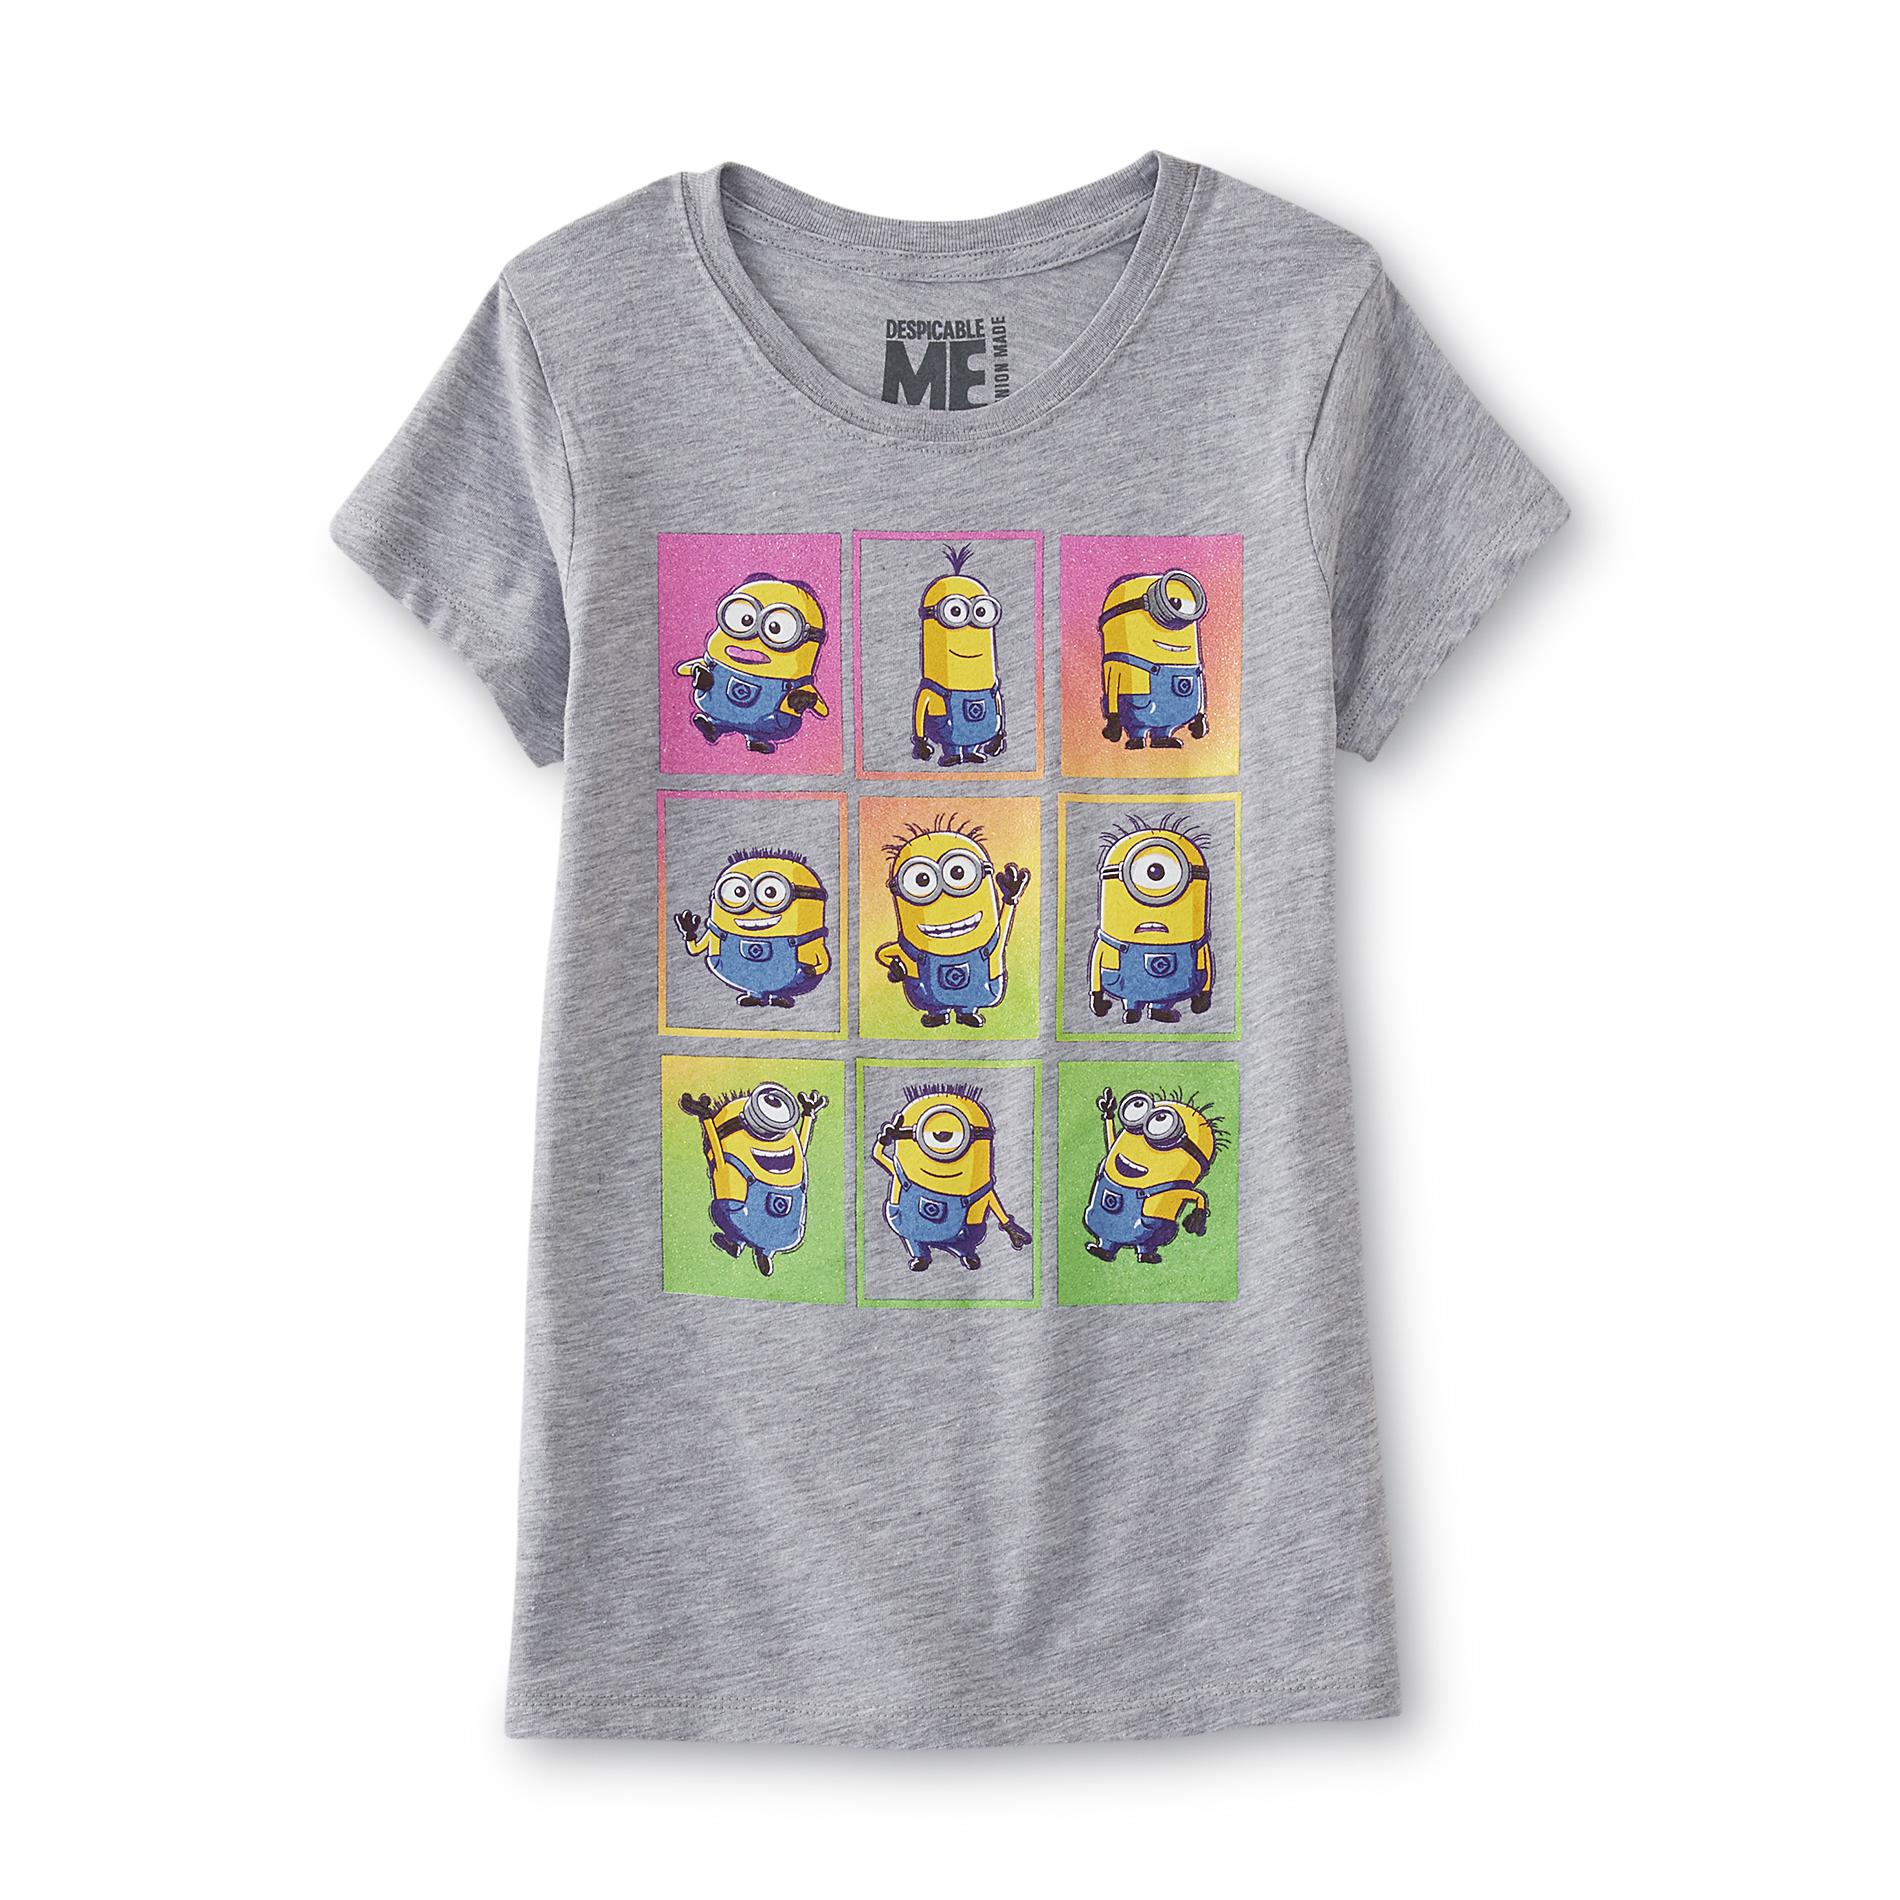 Illumination Entertainment Girl's Graphic T-Shirt - Minions